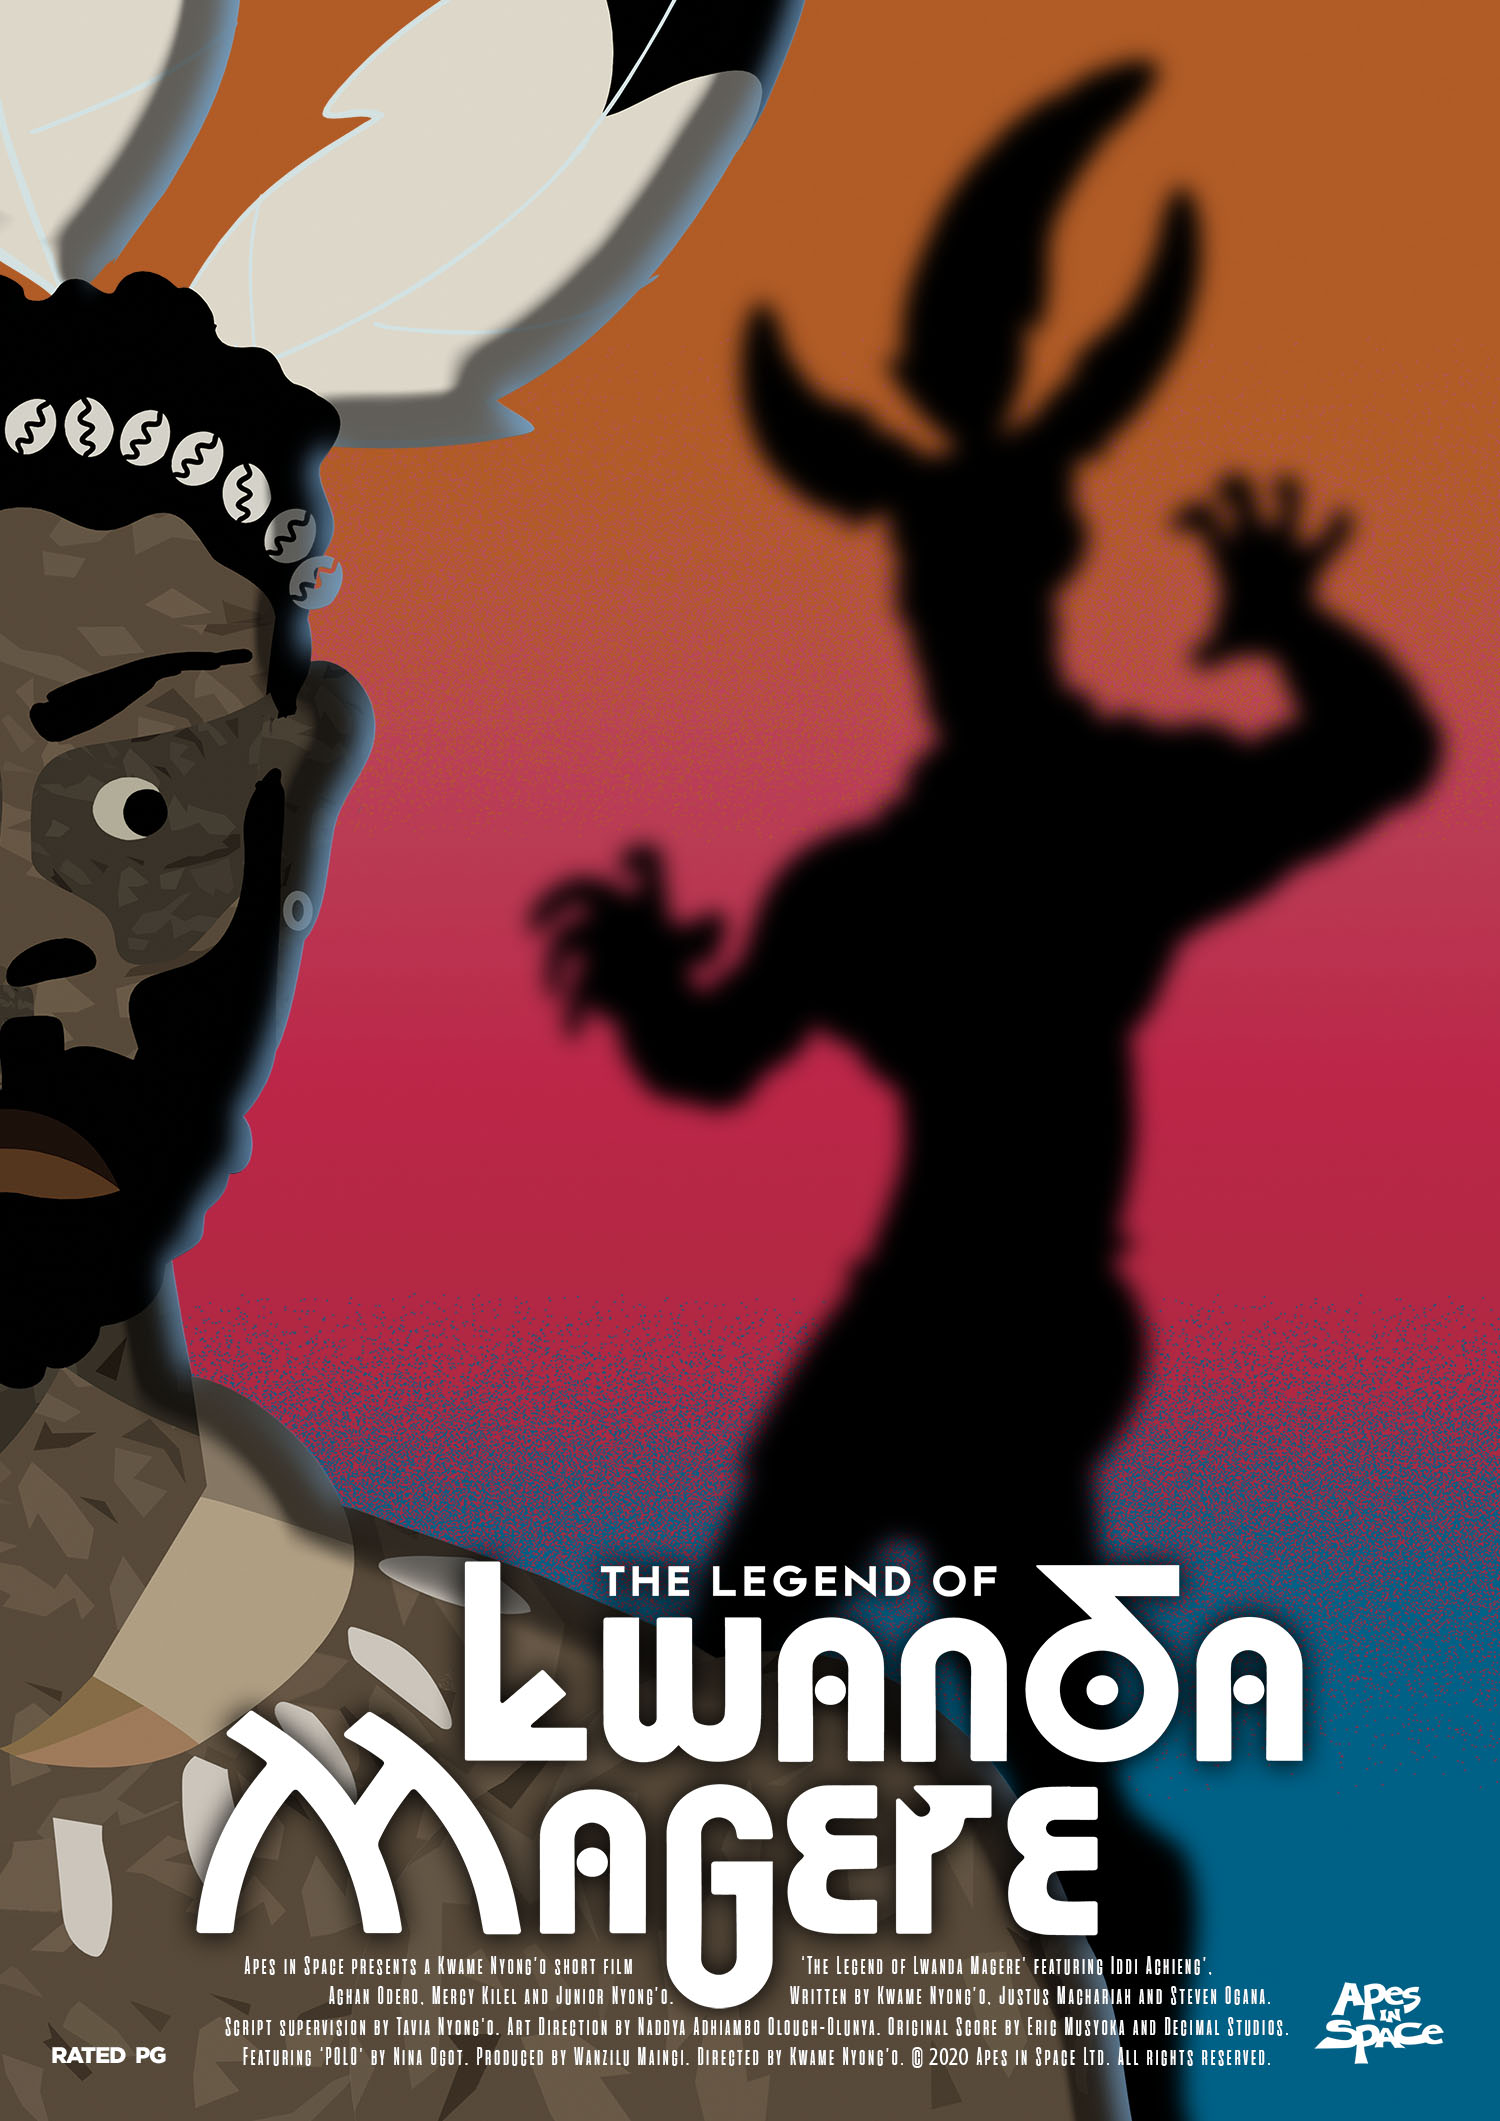 The Legend of Lwanda Magere